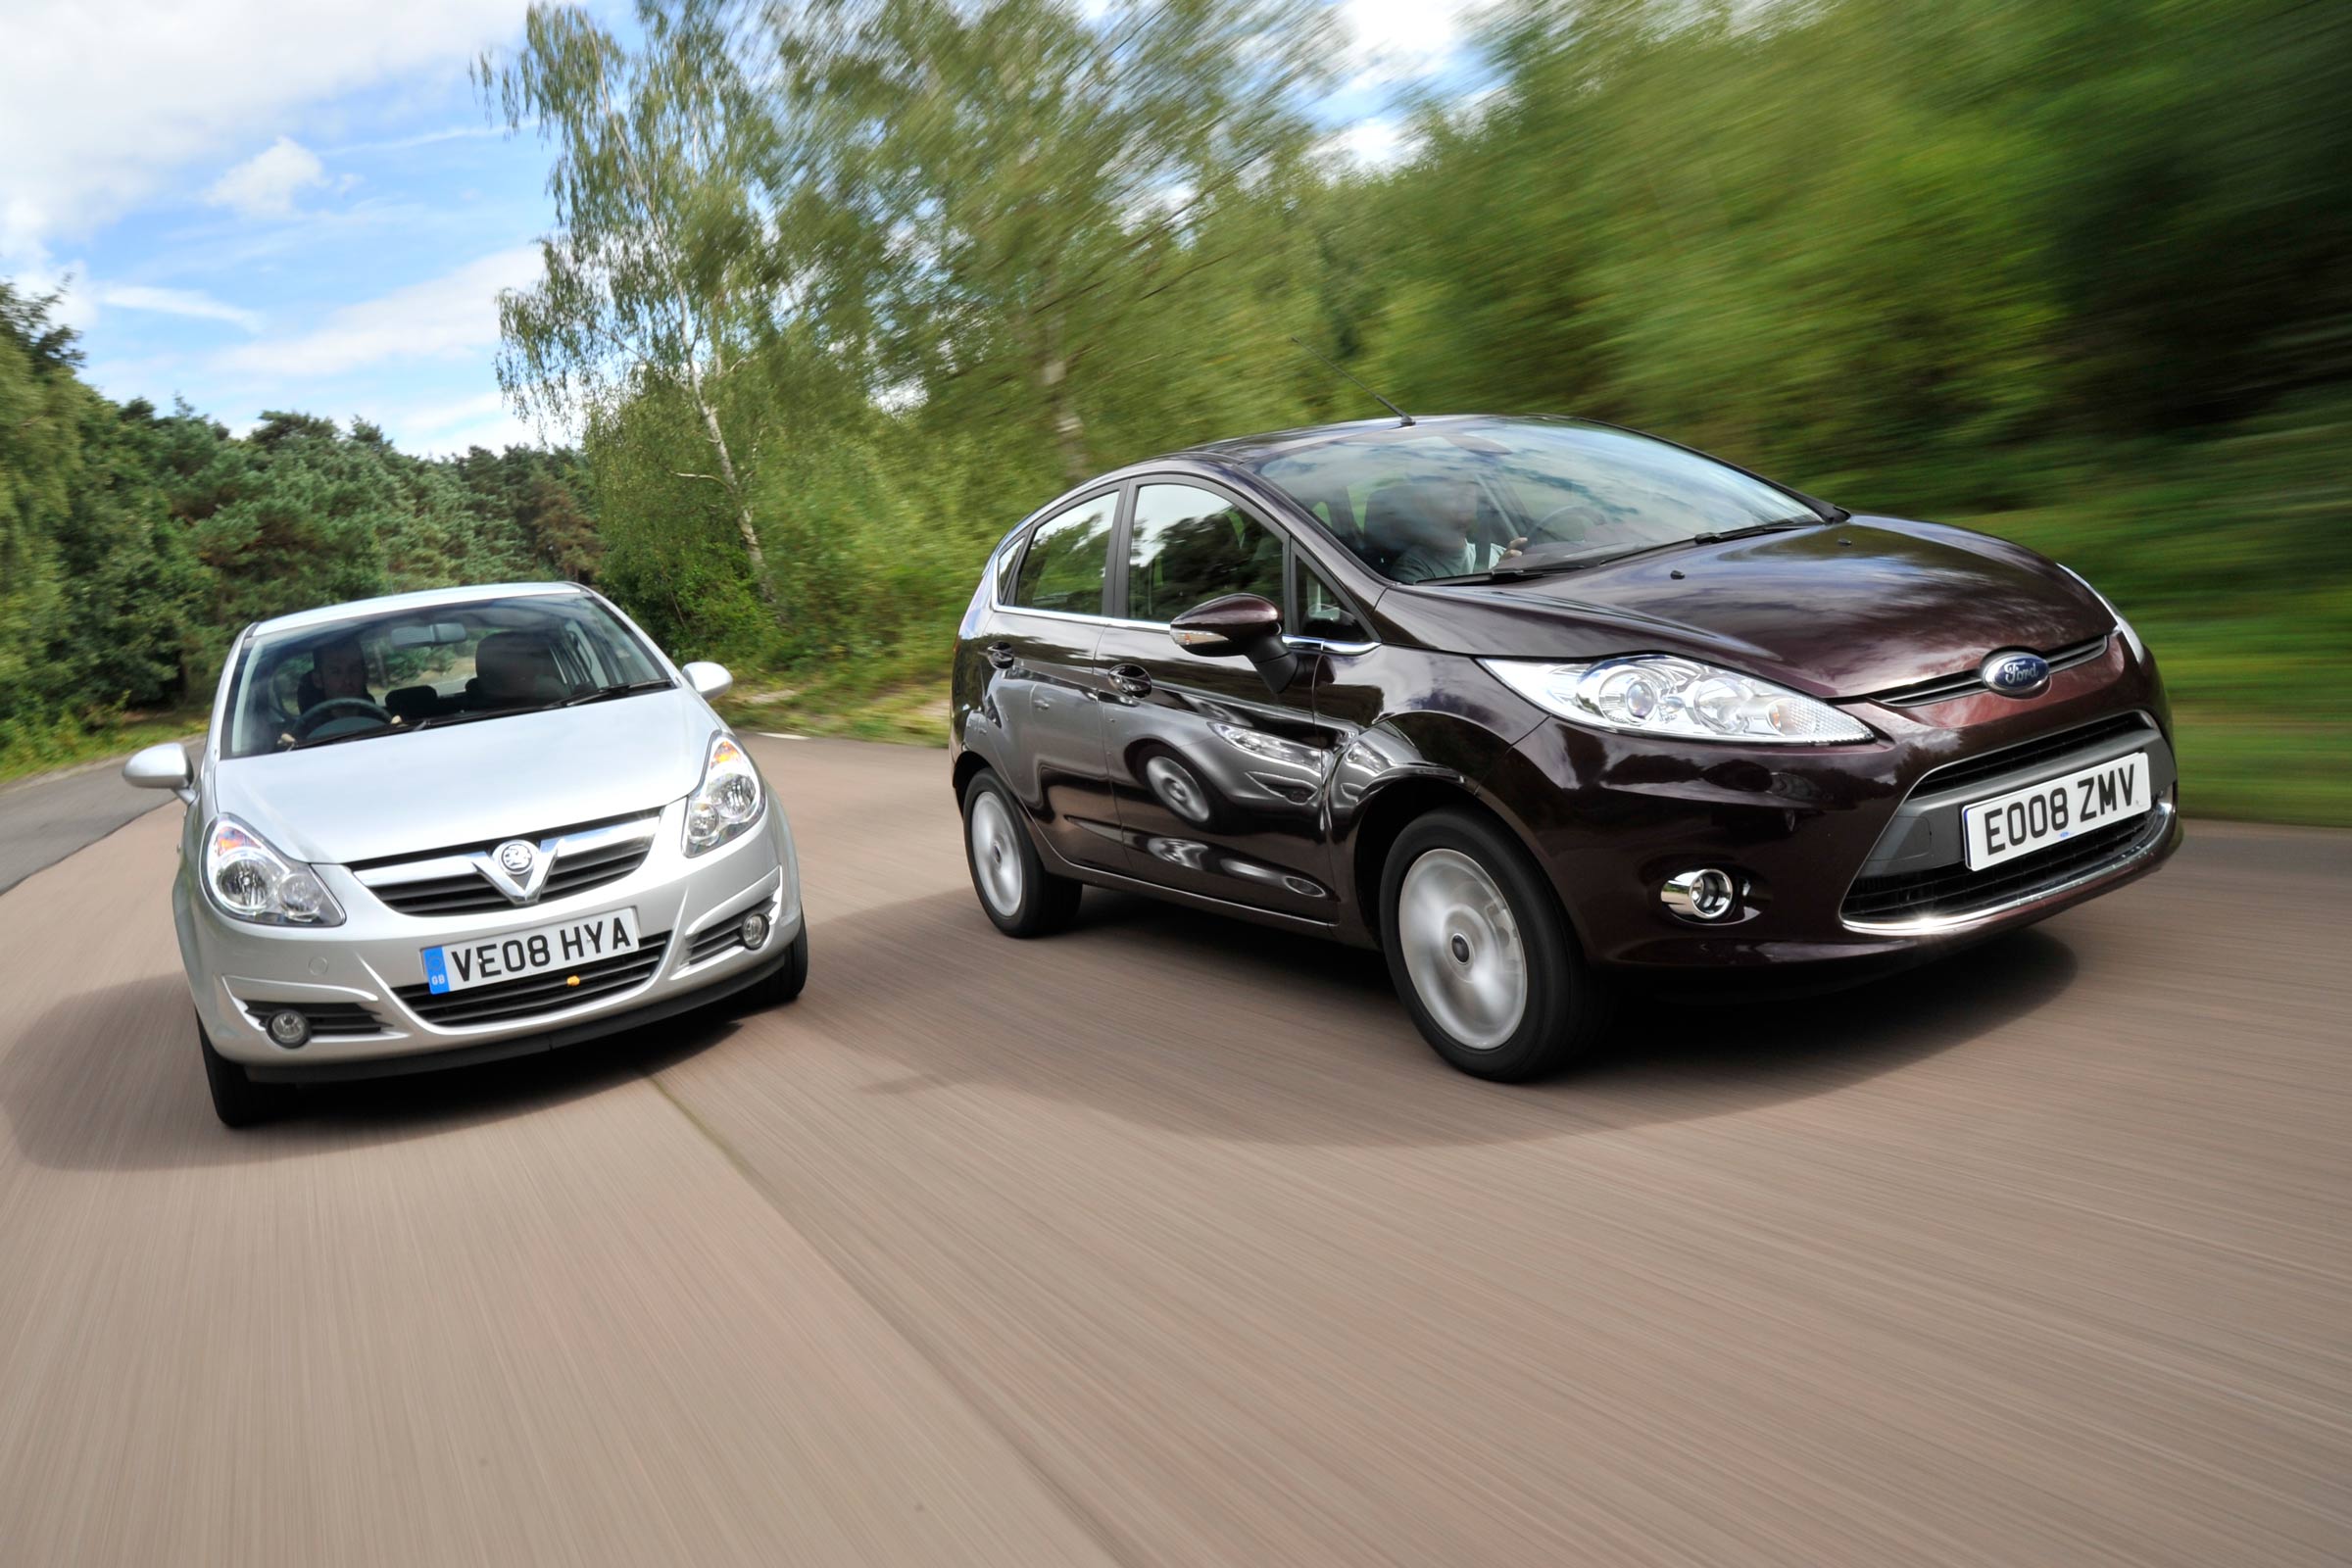 Opel vs Ford. Форд ц Макс Opel Meriva. Ford c Max vs Renault Scenic. Insignia vs a6.